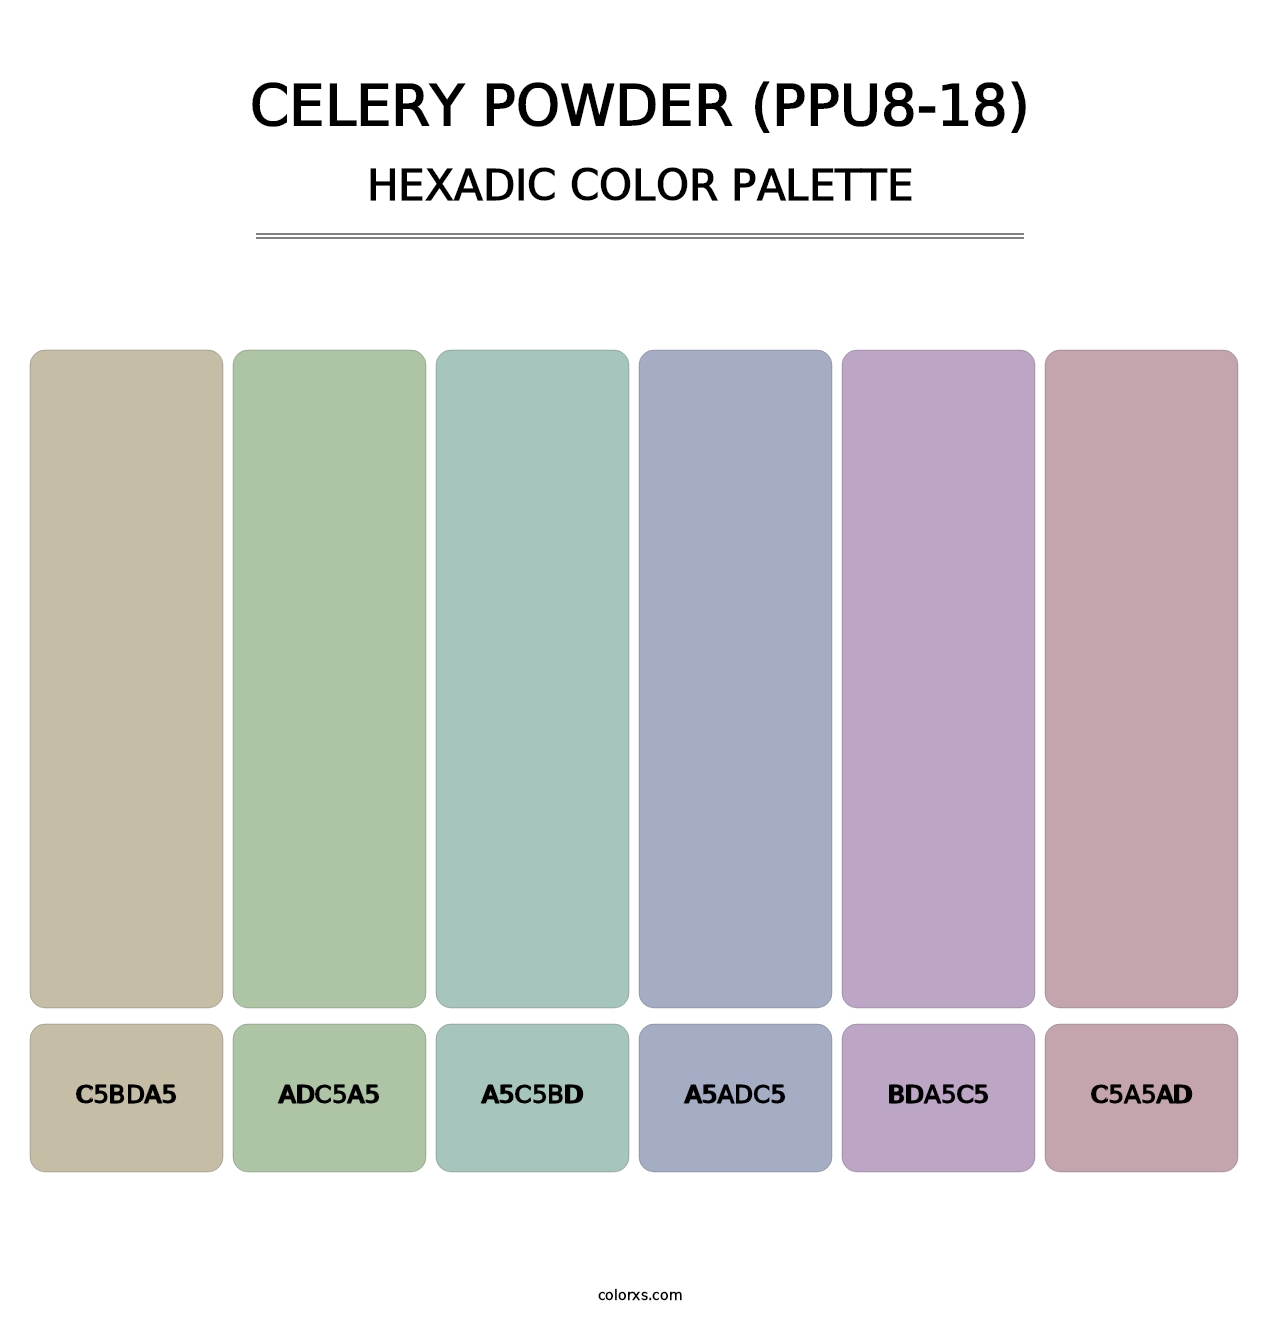 Celery Powder (PPU8-18) - Hexadic Color Palette